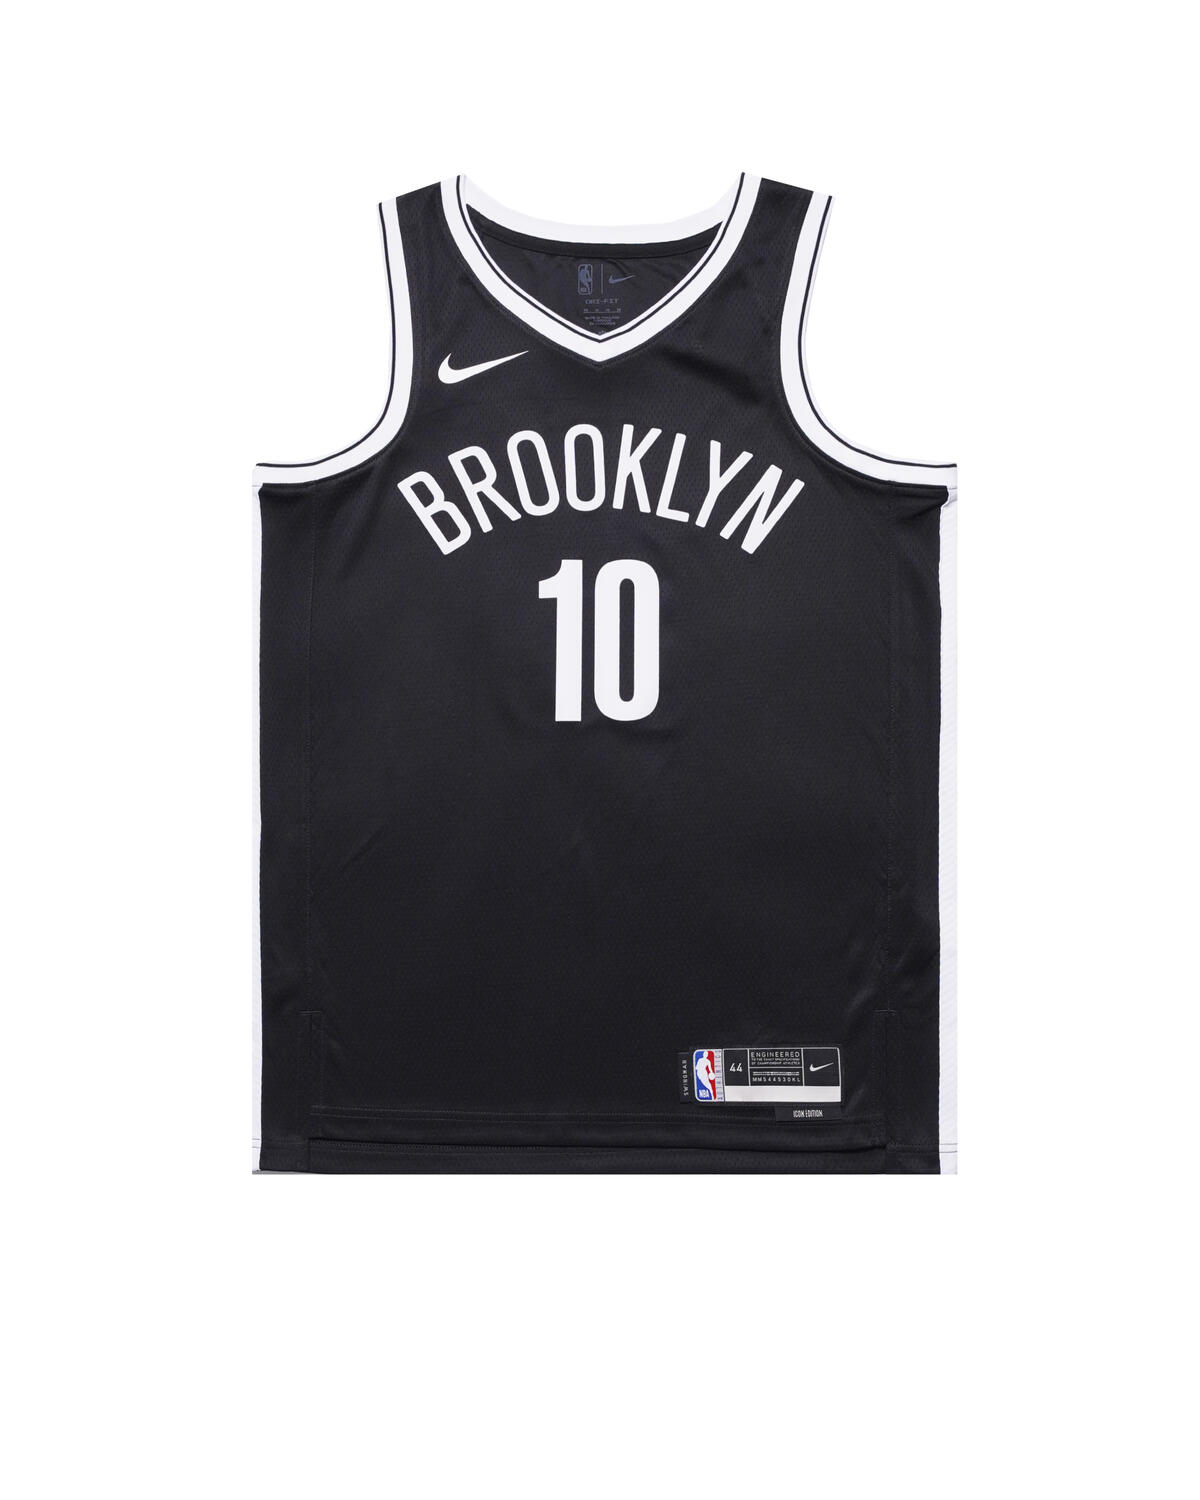 Brooklyn Nets Jordan Brand Kids Apparel, Kids Nets Clothing, Merchandise